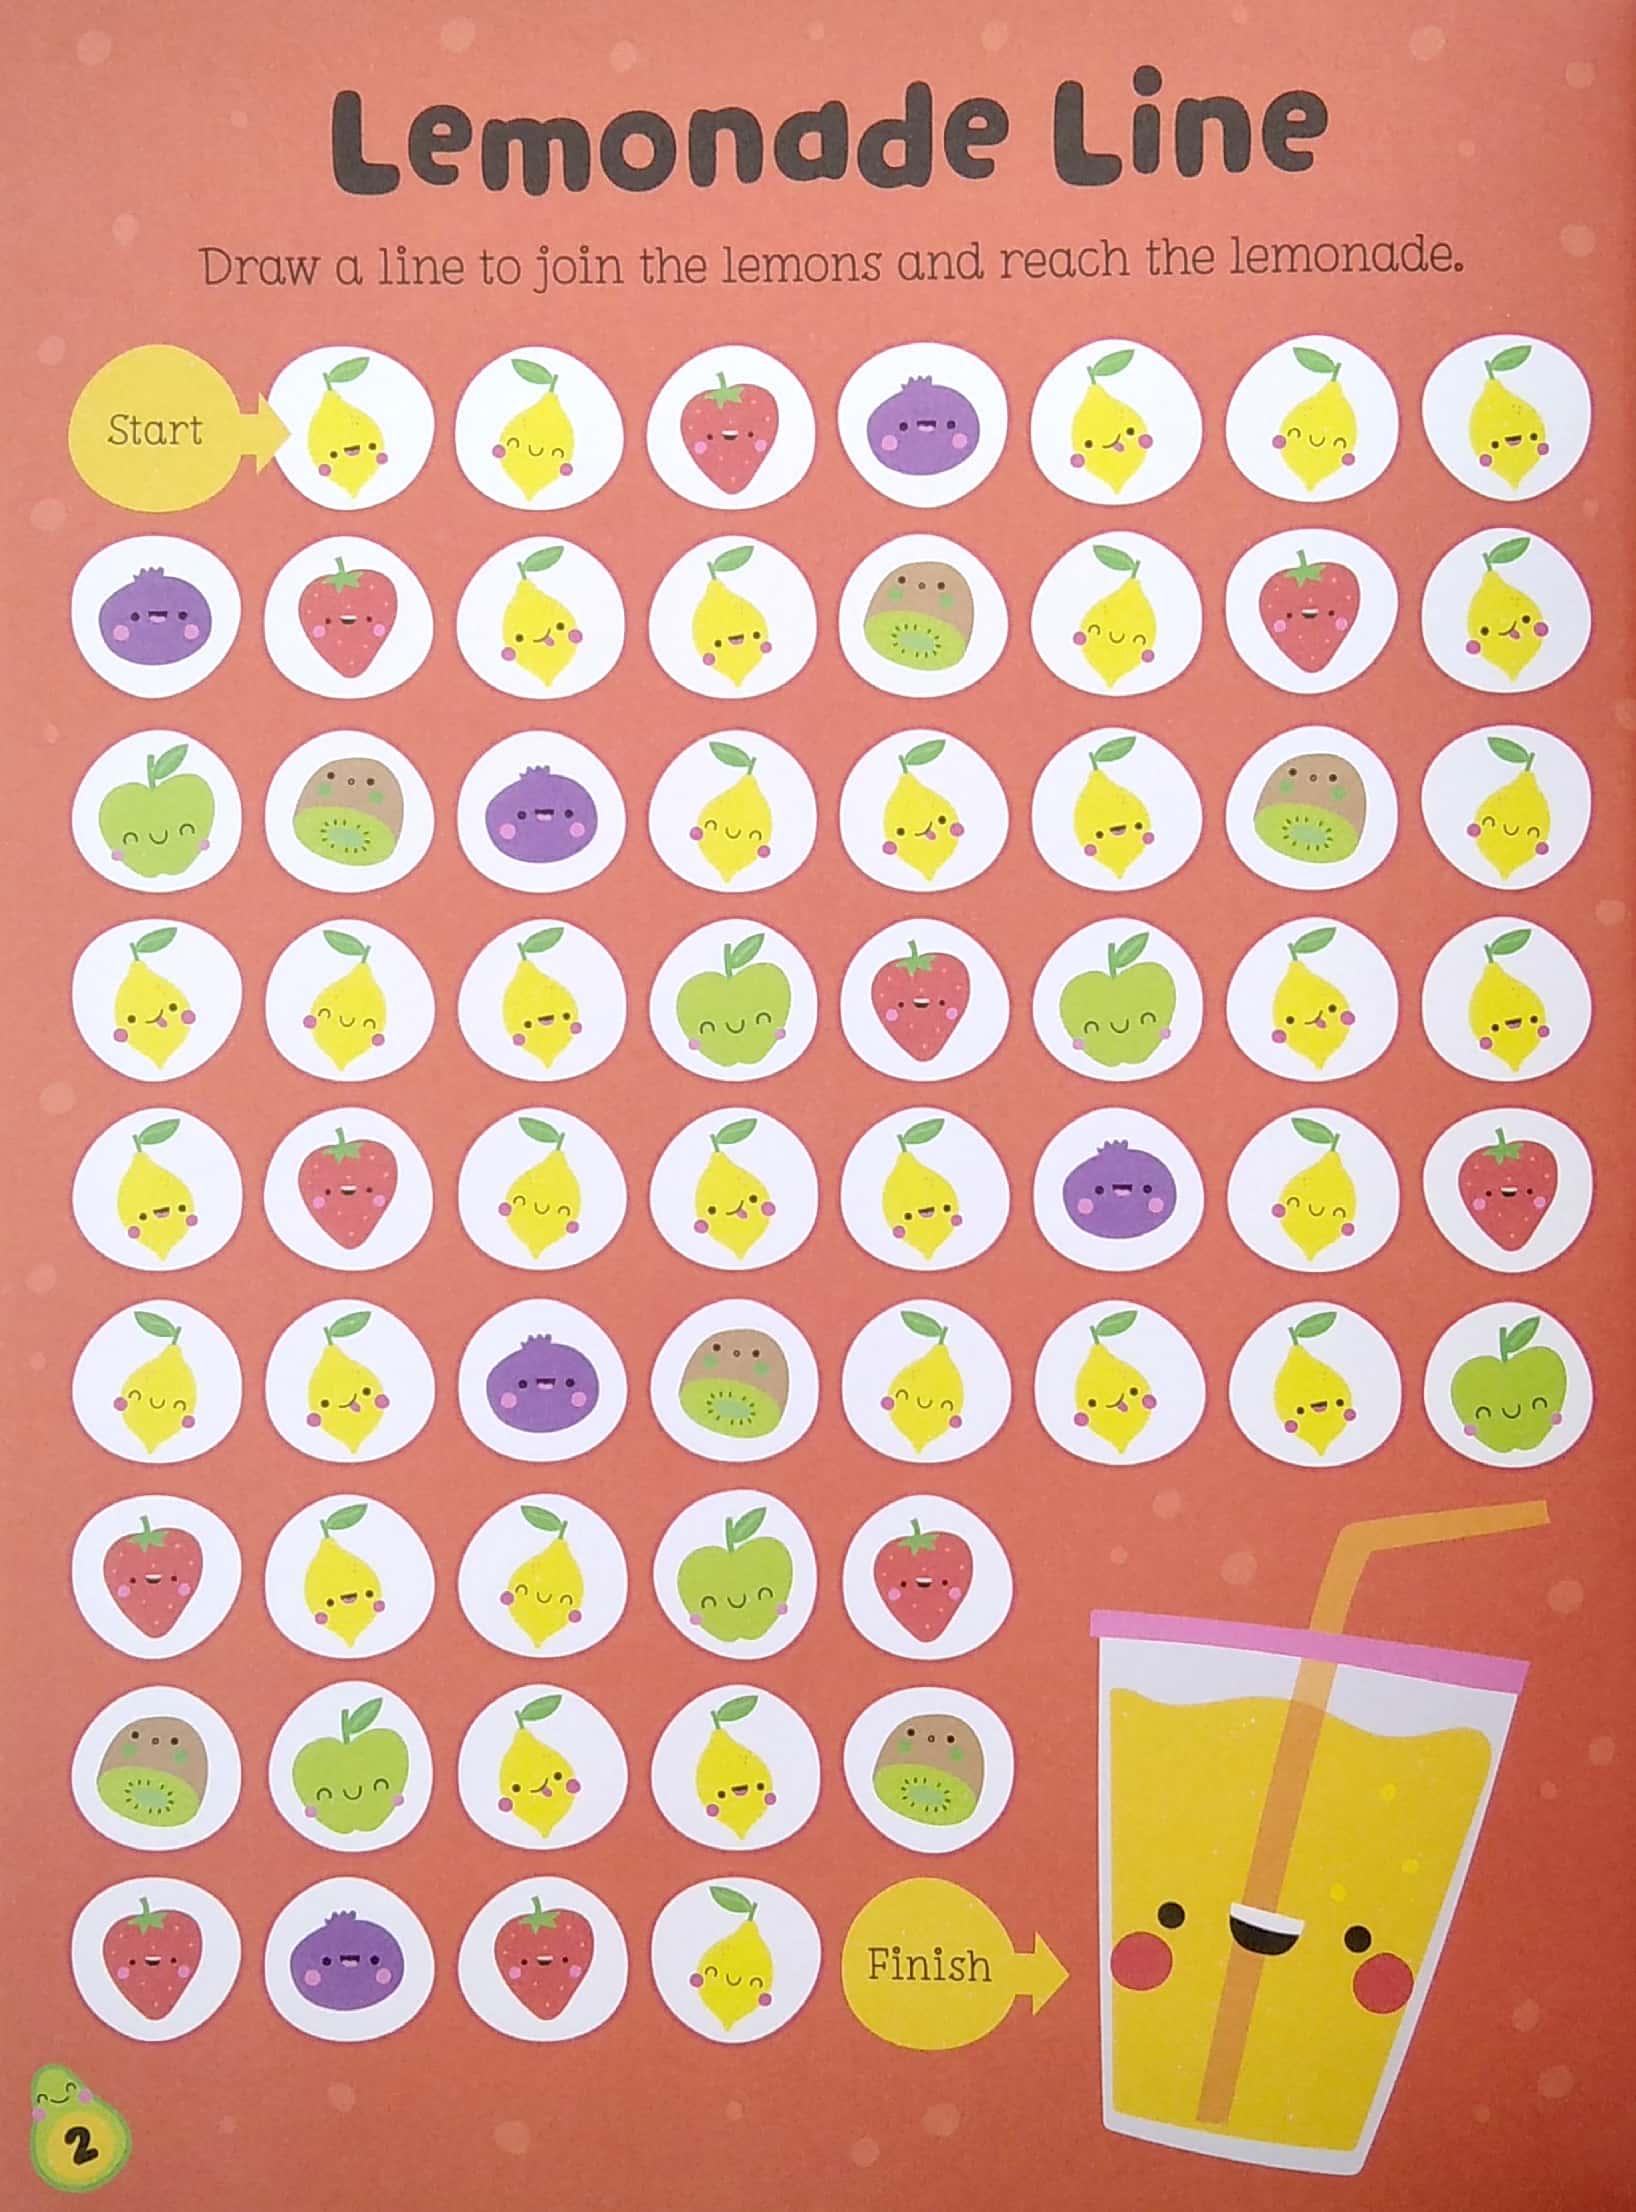 Shiny Stickers Super-Cute Activity Book